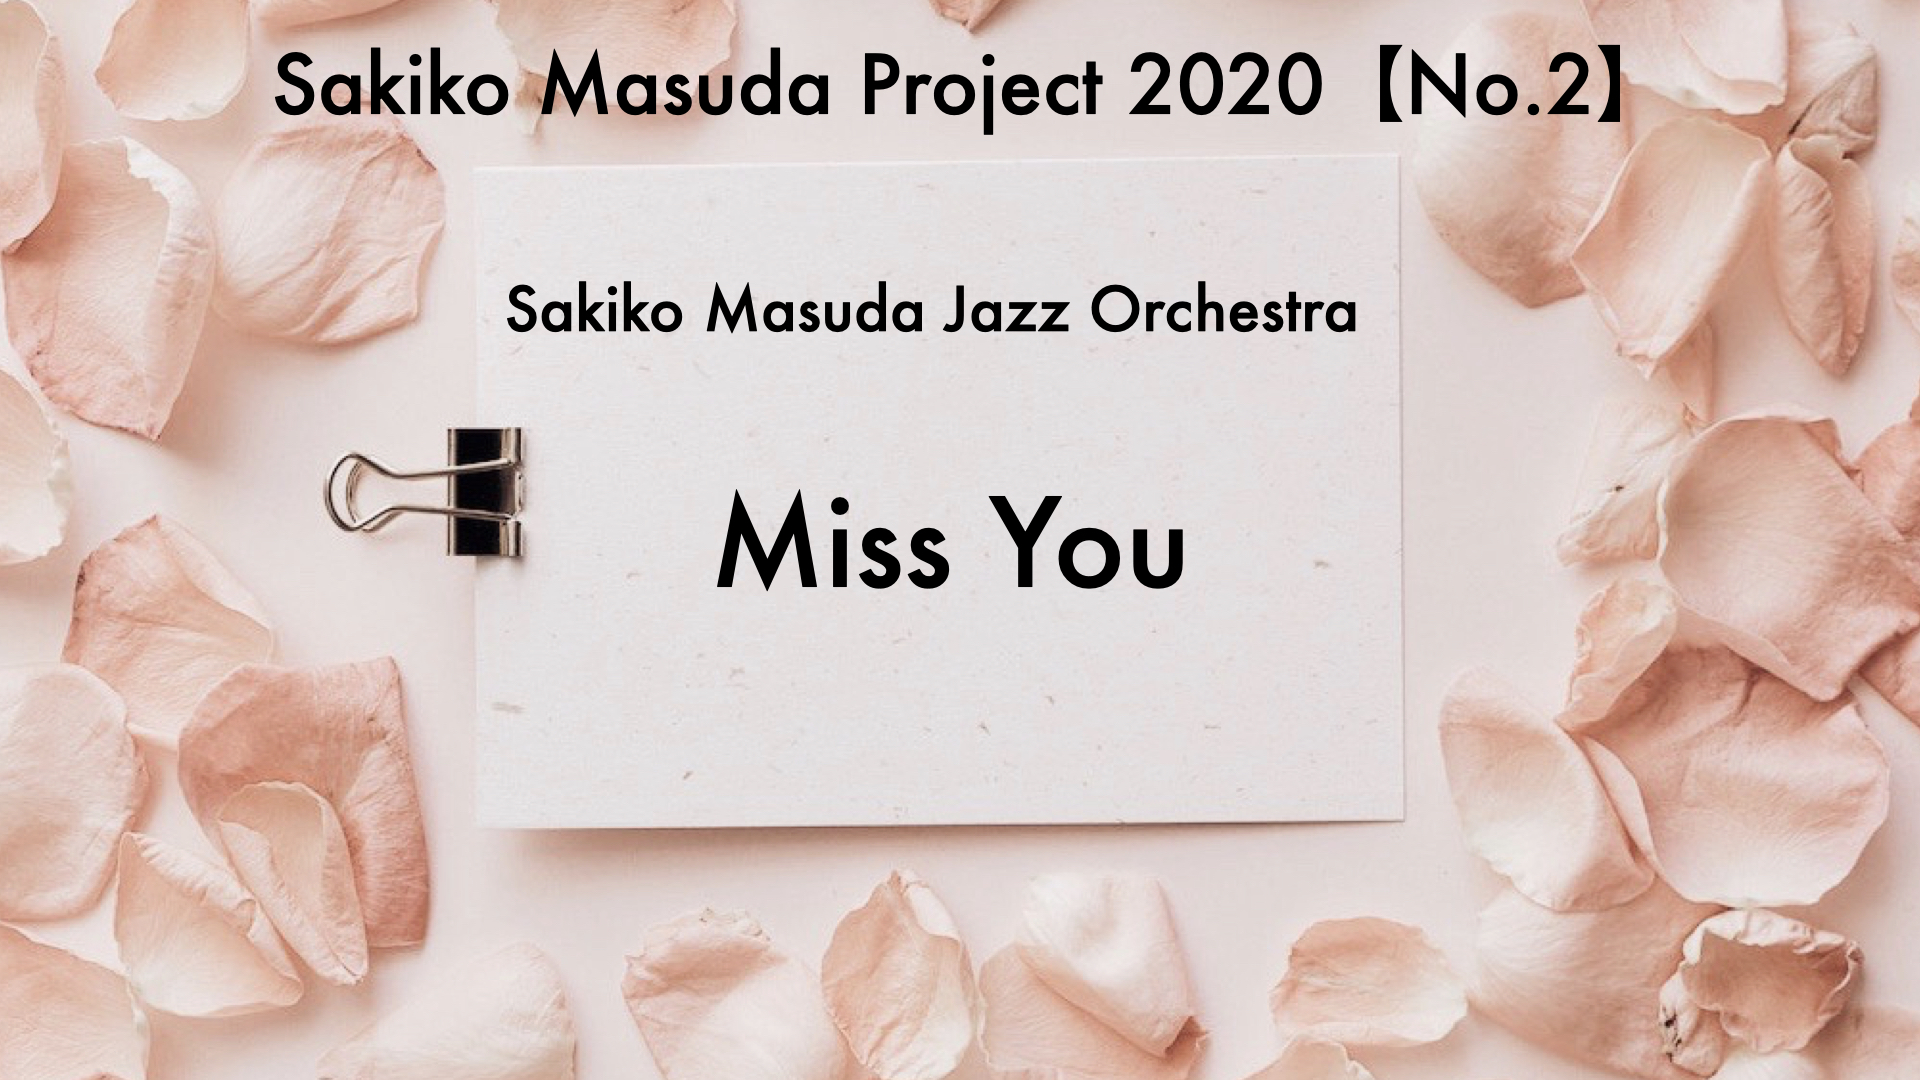 Miss You【No.2 Sakiko Masuda Project 2020】